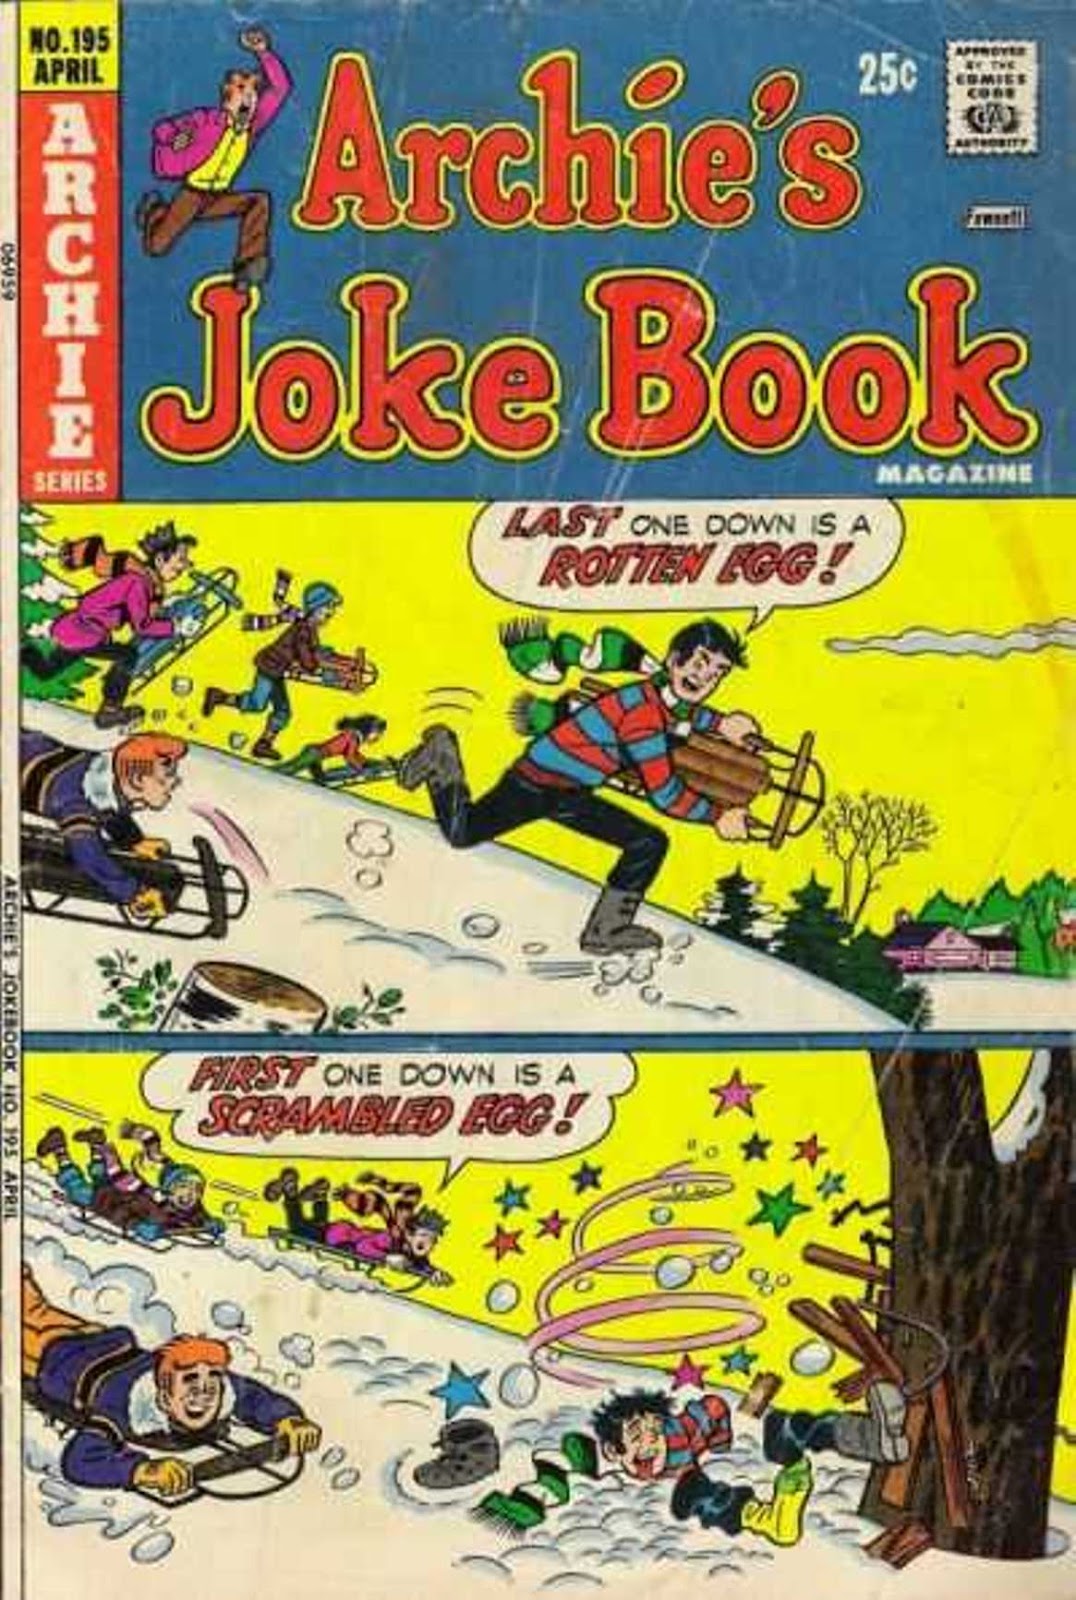 Archie's Joke Book Magazine 195 Page 1